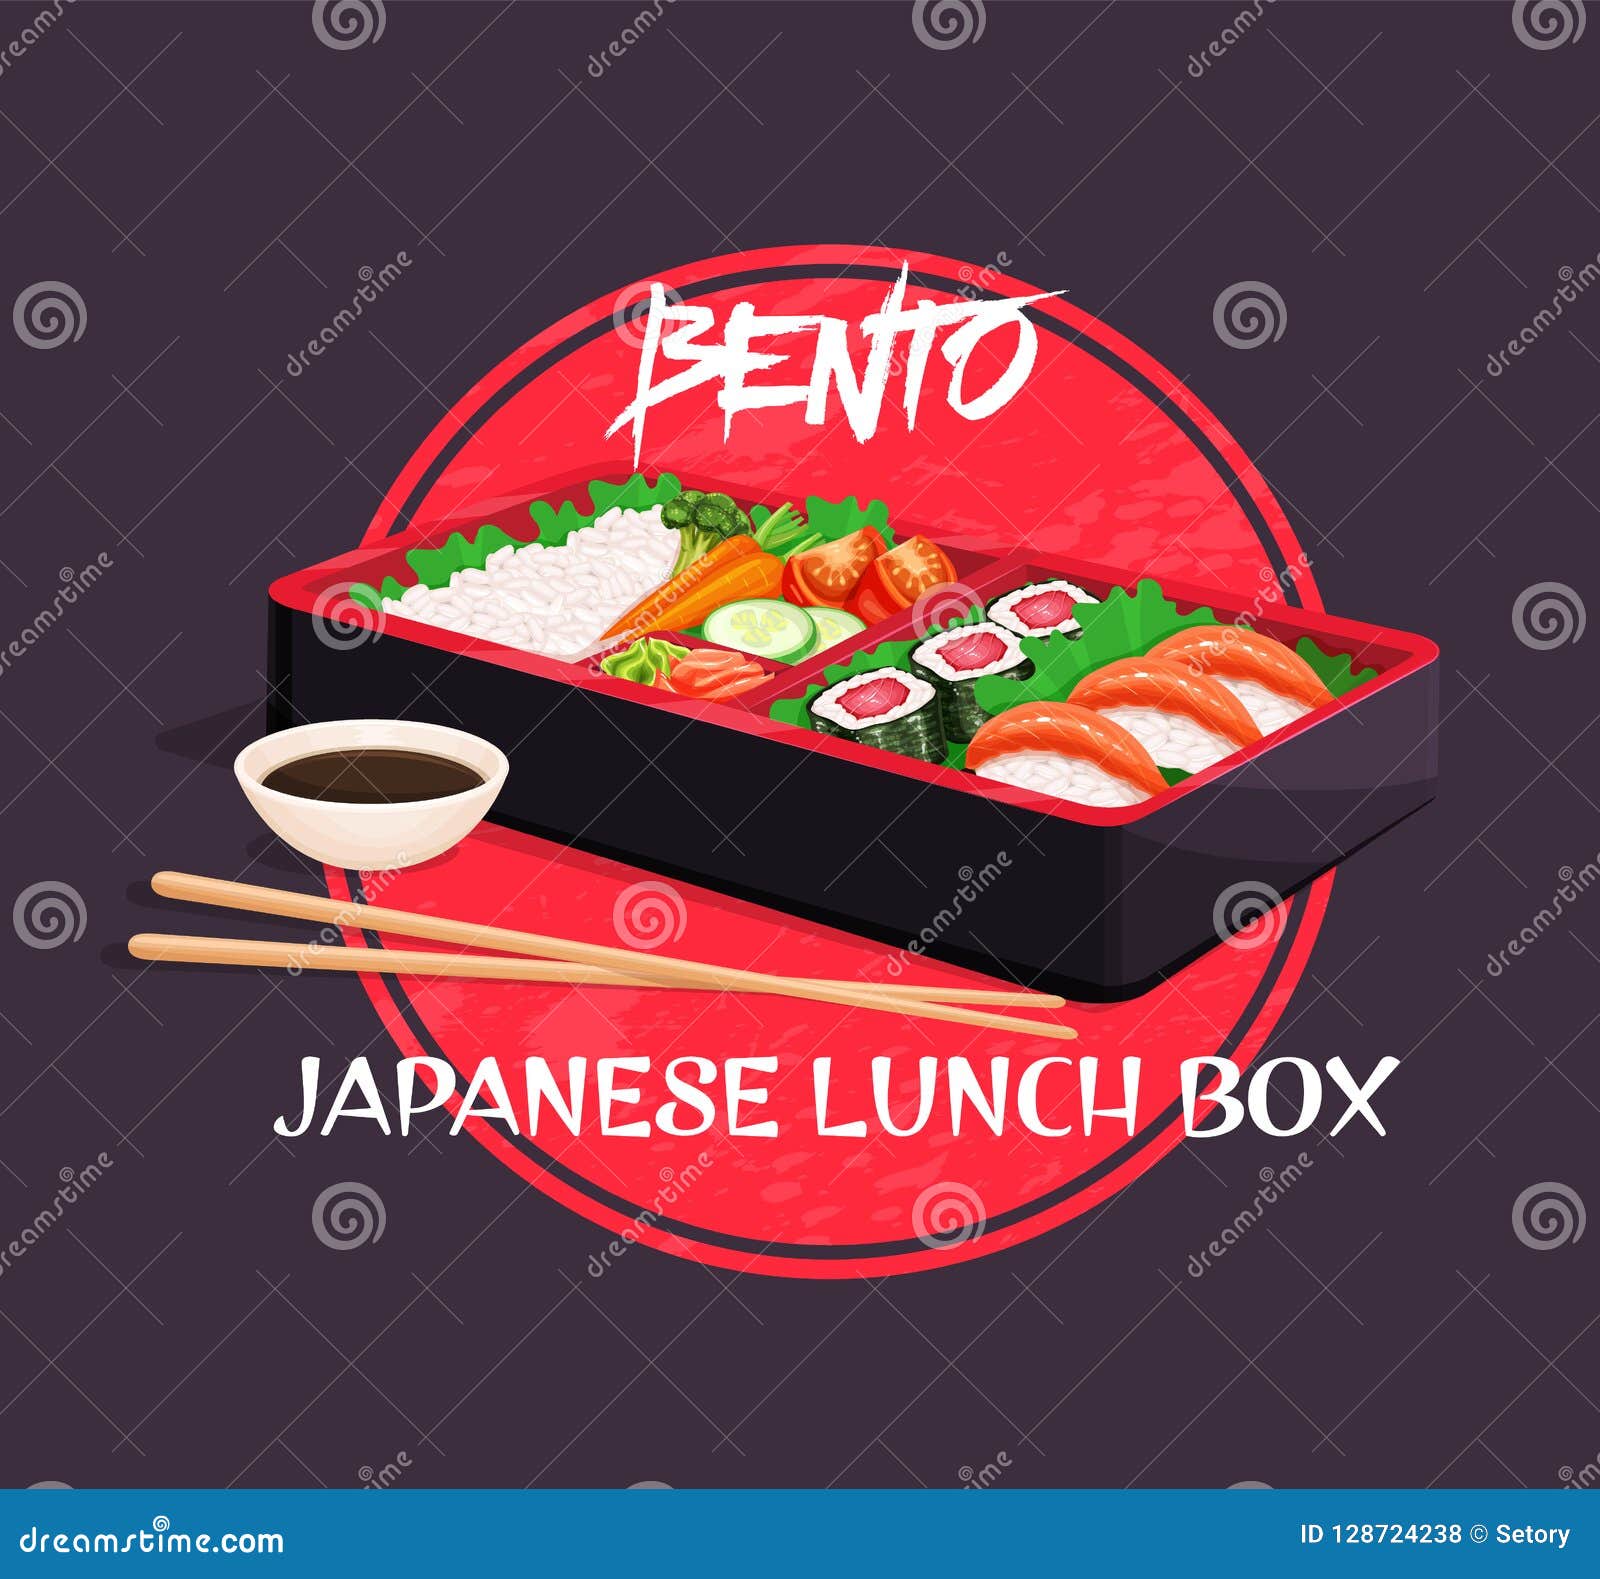 https://thumbs.dreamstime.com/z/bento-japanese-lunch-box-bento-japanese-lunch-box-sushi-rolls-chopsticks-concept-asian-food-vector-illustration-128724238.jpg